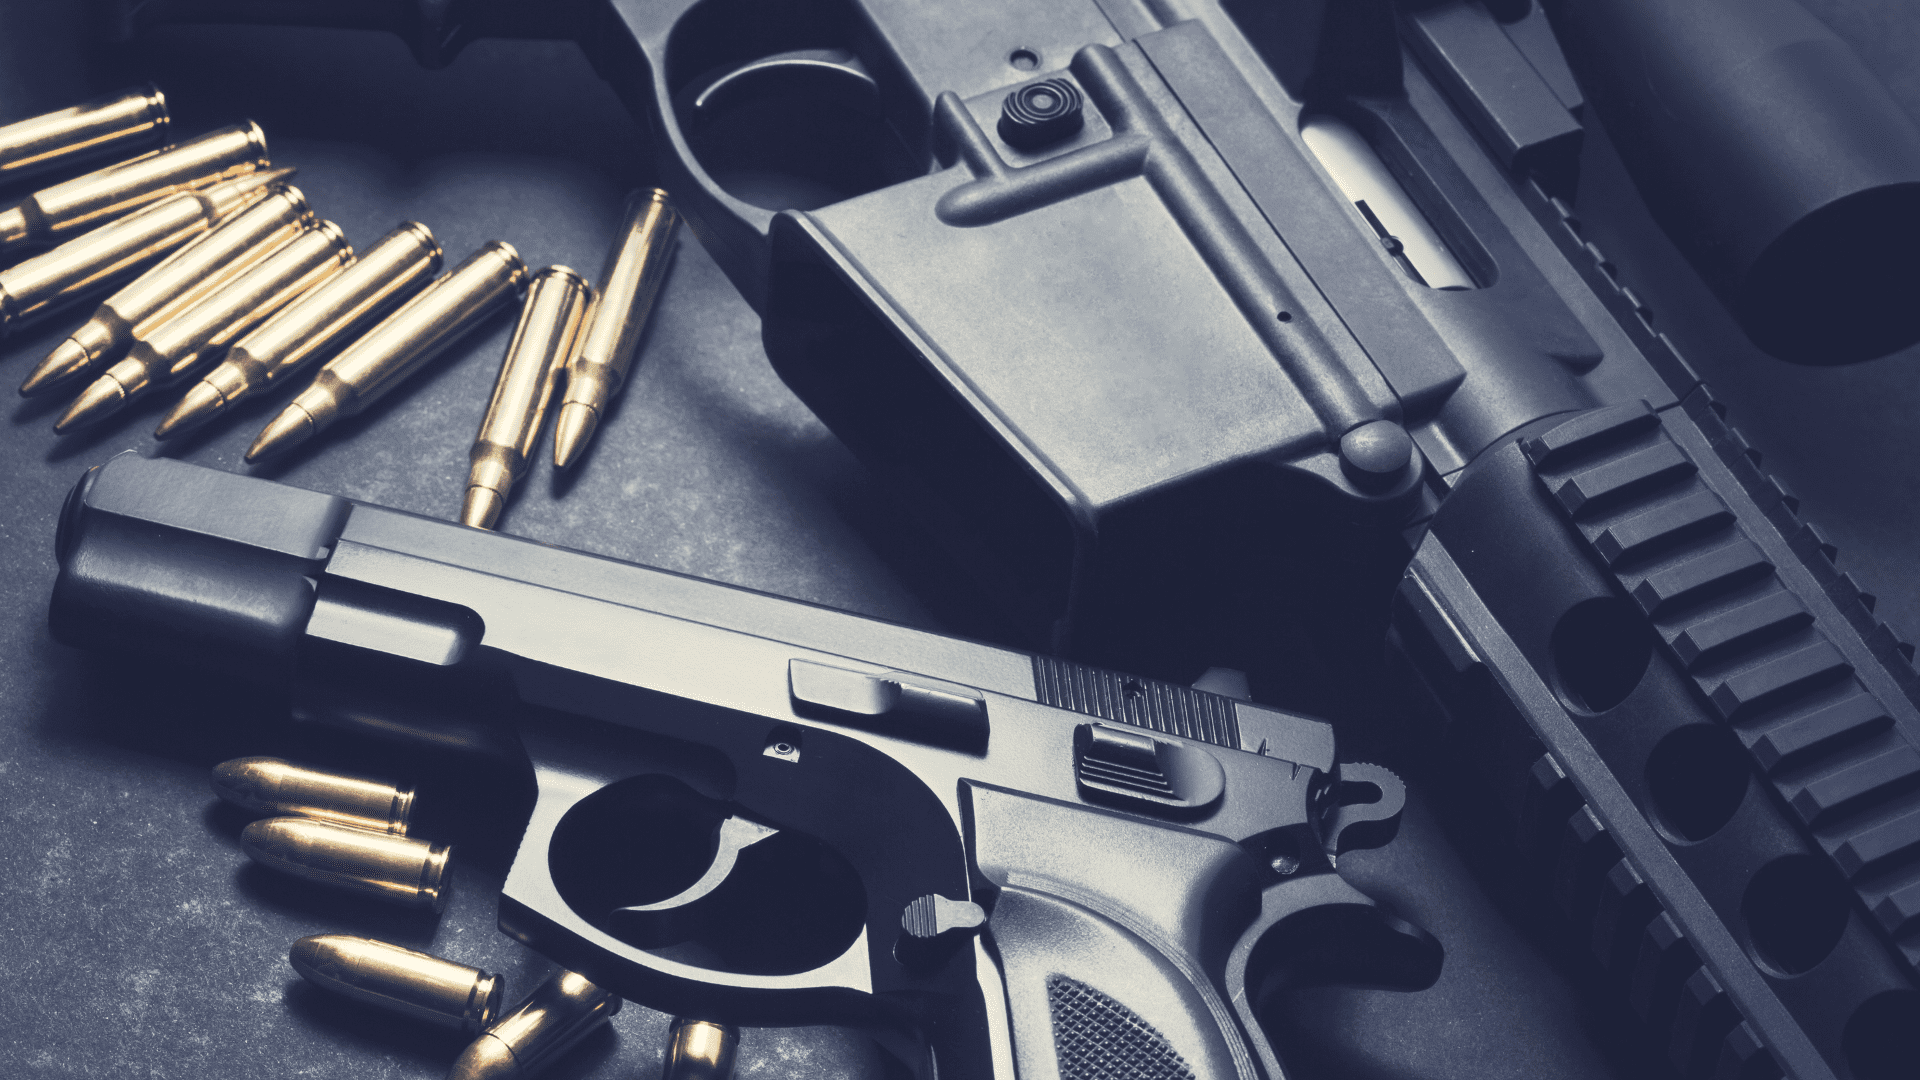 Featured image for “Gun group asks court to halt semi-auto, magazine bans”